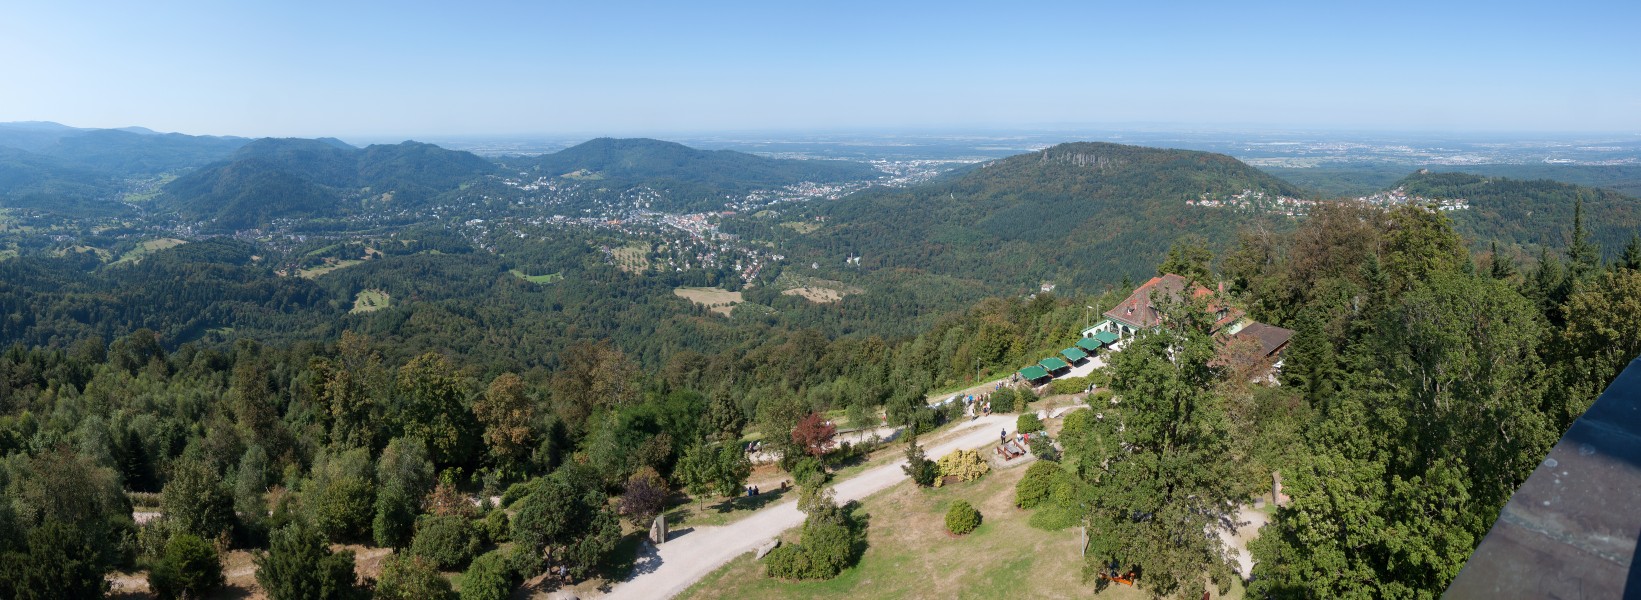 Merkur - Baden-Baden - Panorama